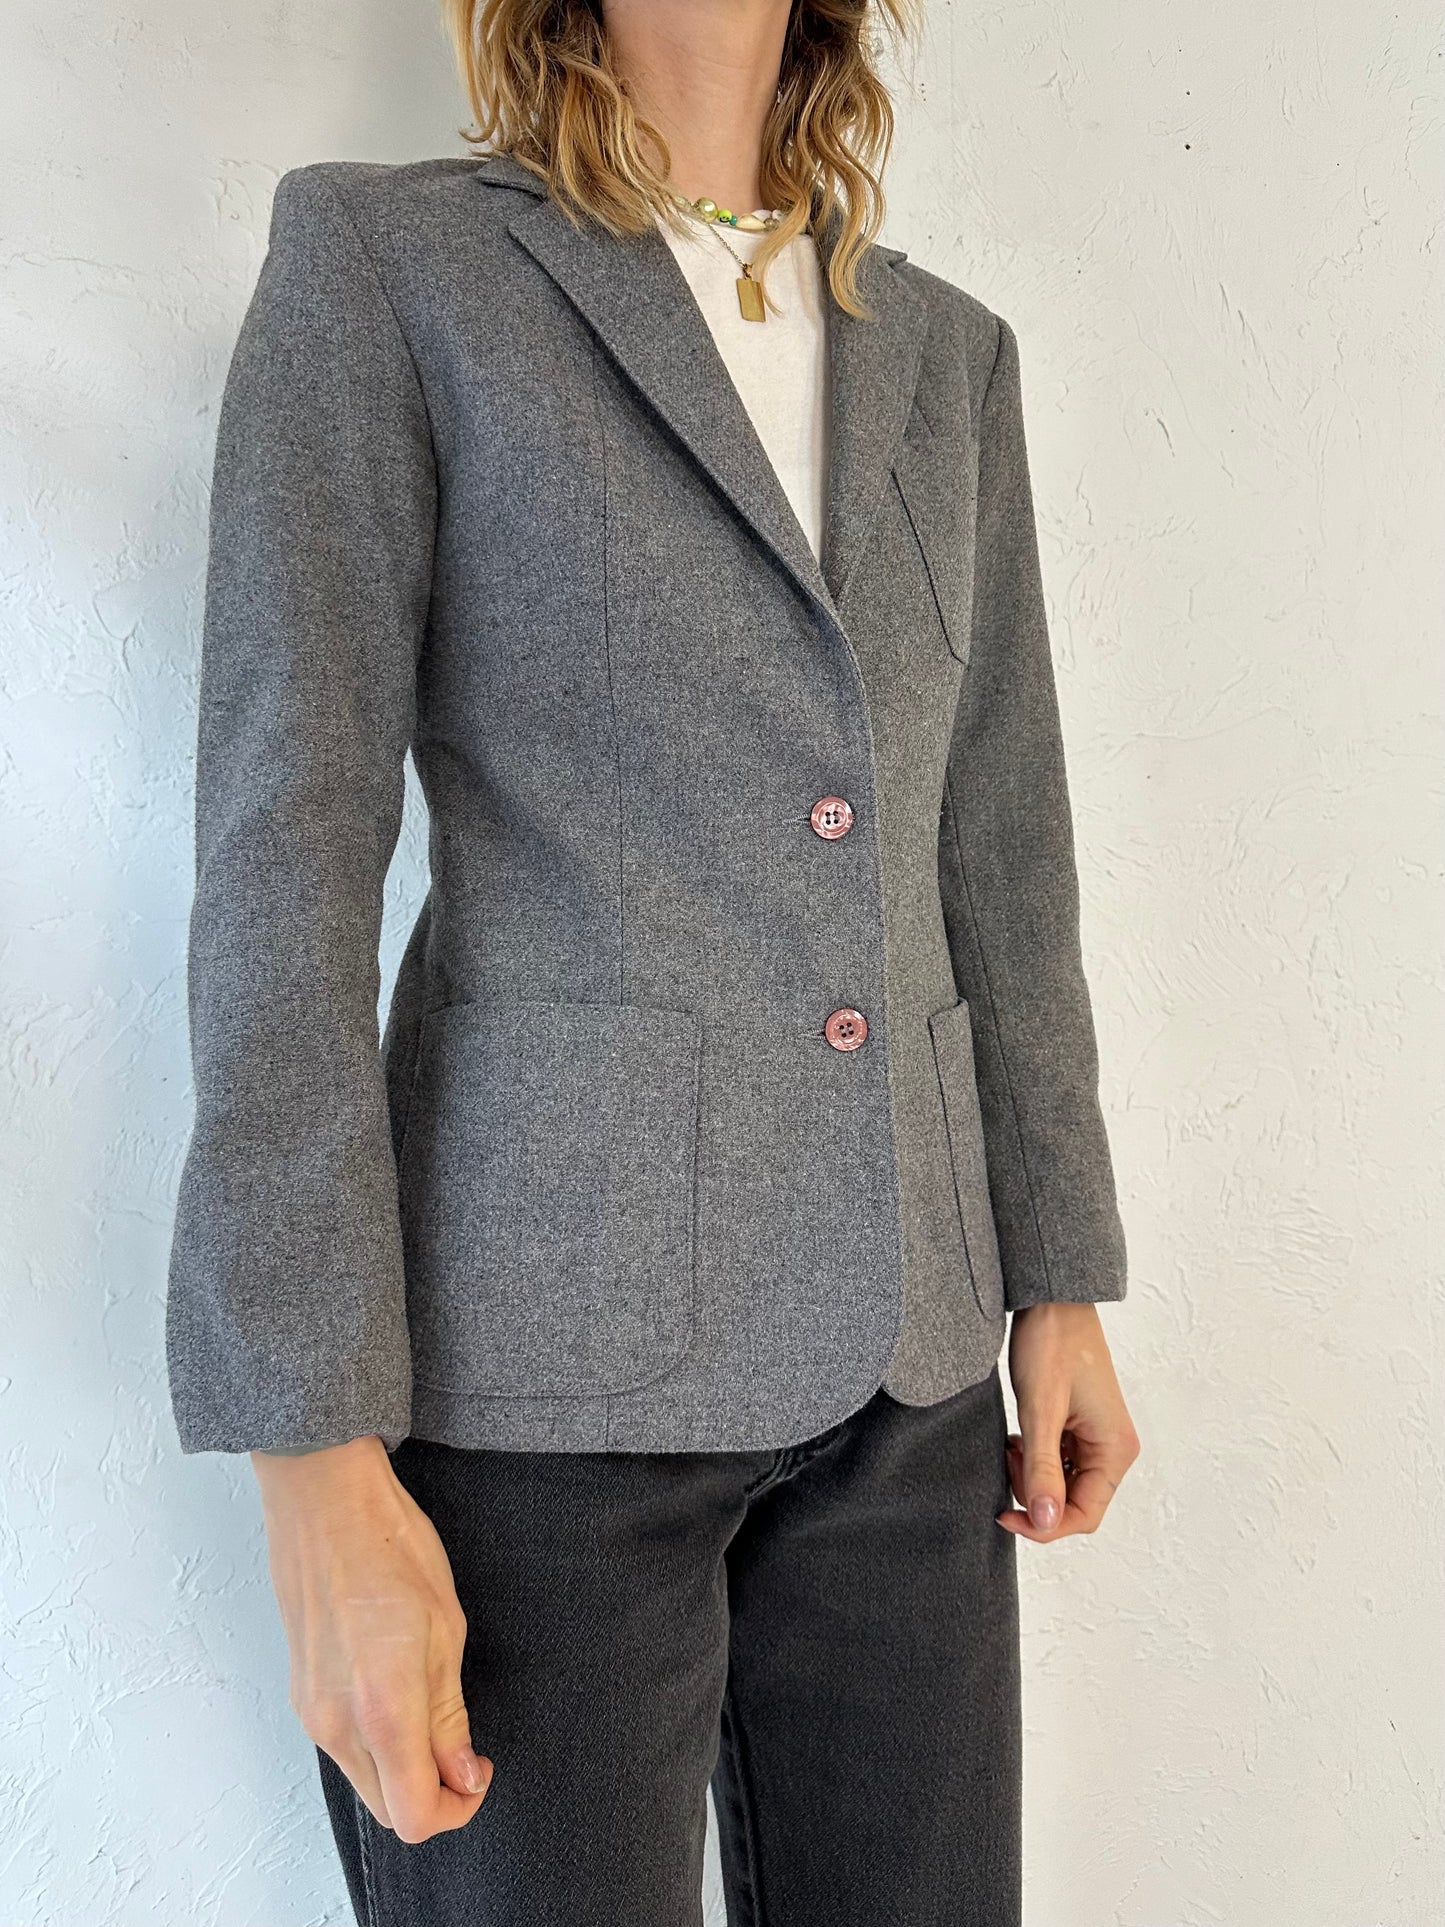 80s 'Niki' Gray Blazer Jacket / Small